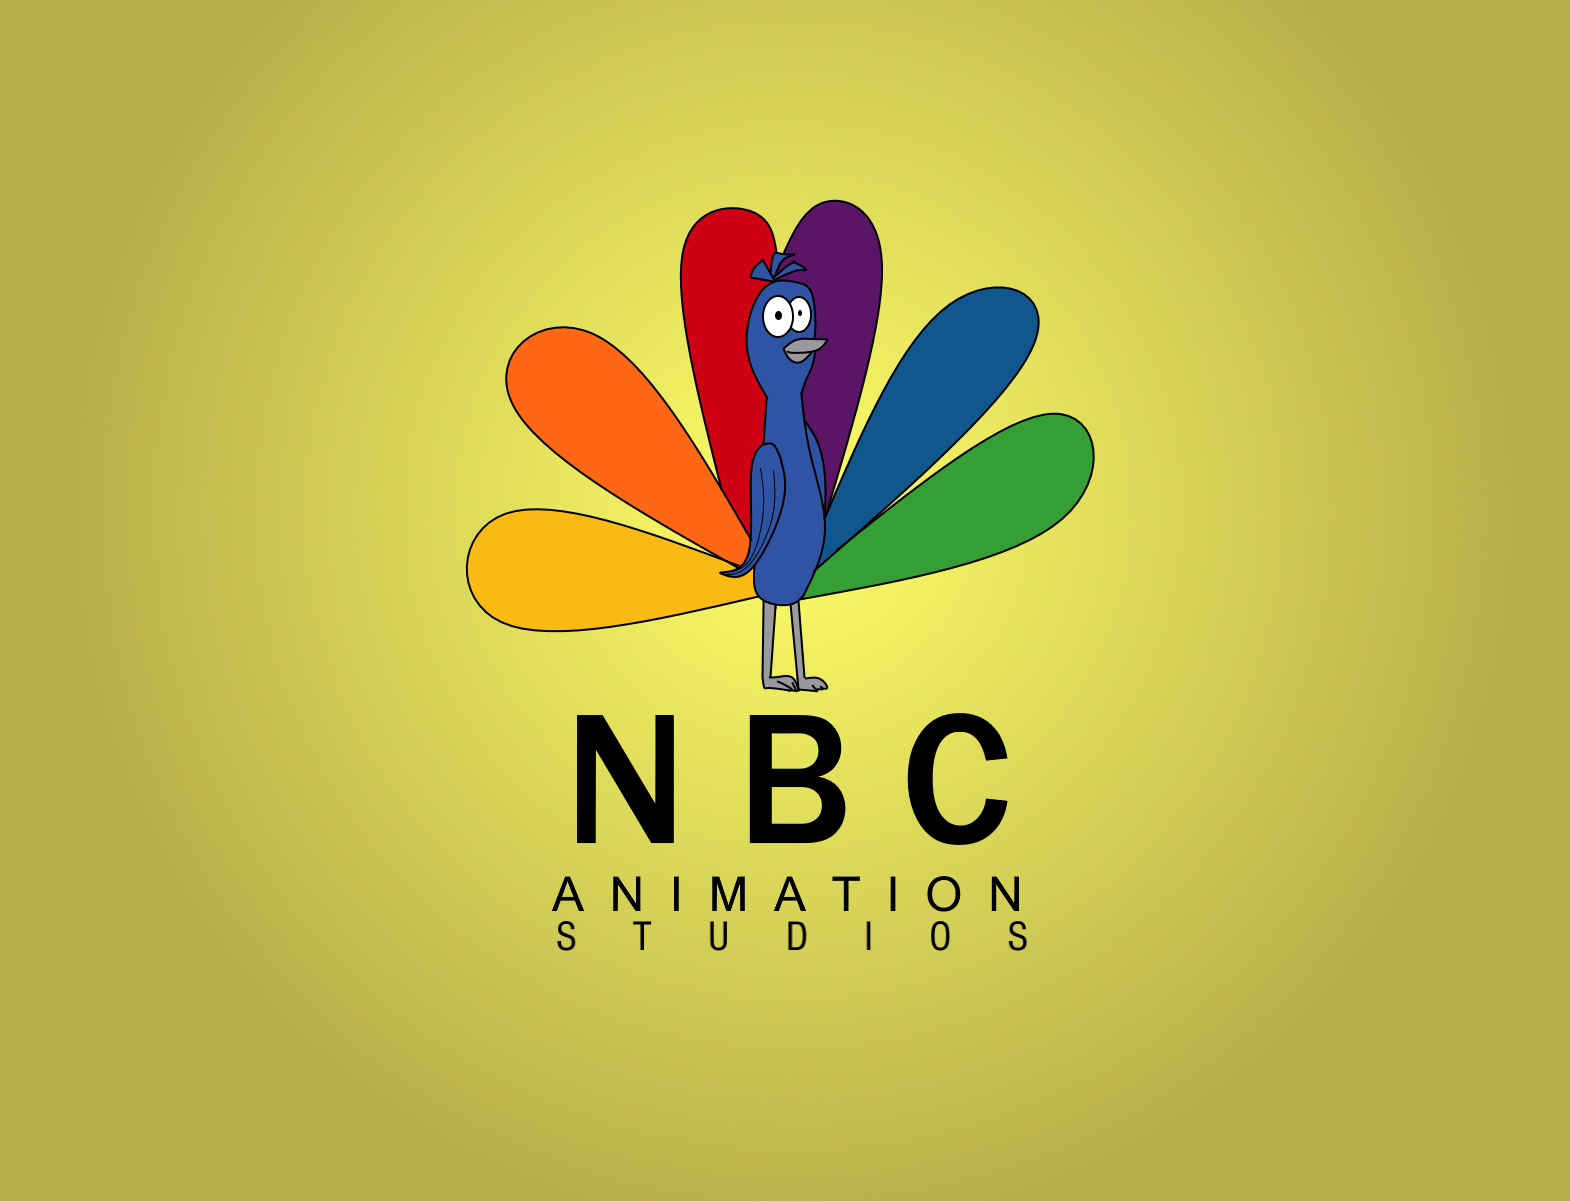 NBC Animation Studios Logo 2002 by BraydenNohaiDeviant on DeviantArt